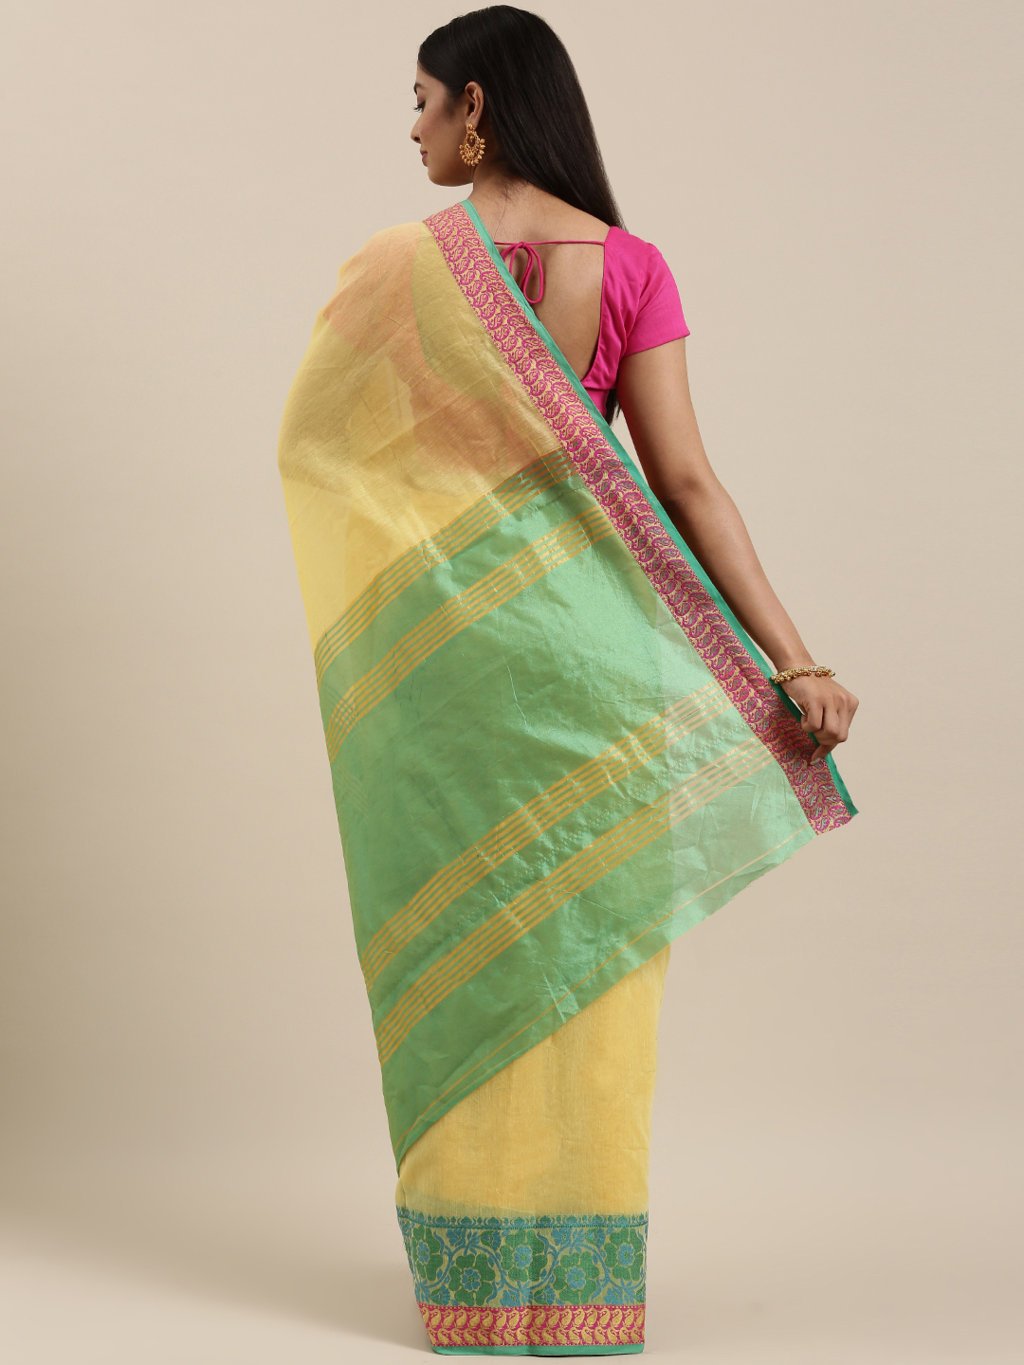 Women's Prints Yellow Cotton Handloom Woven Work Traditional Saree - Sangam Prints